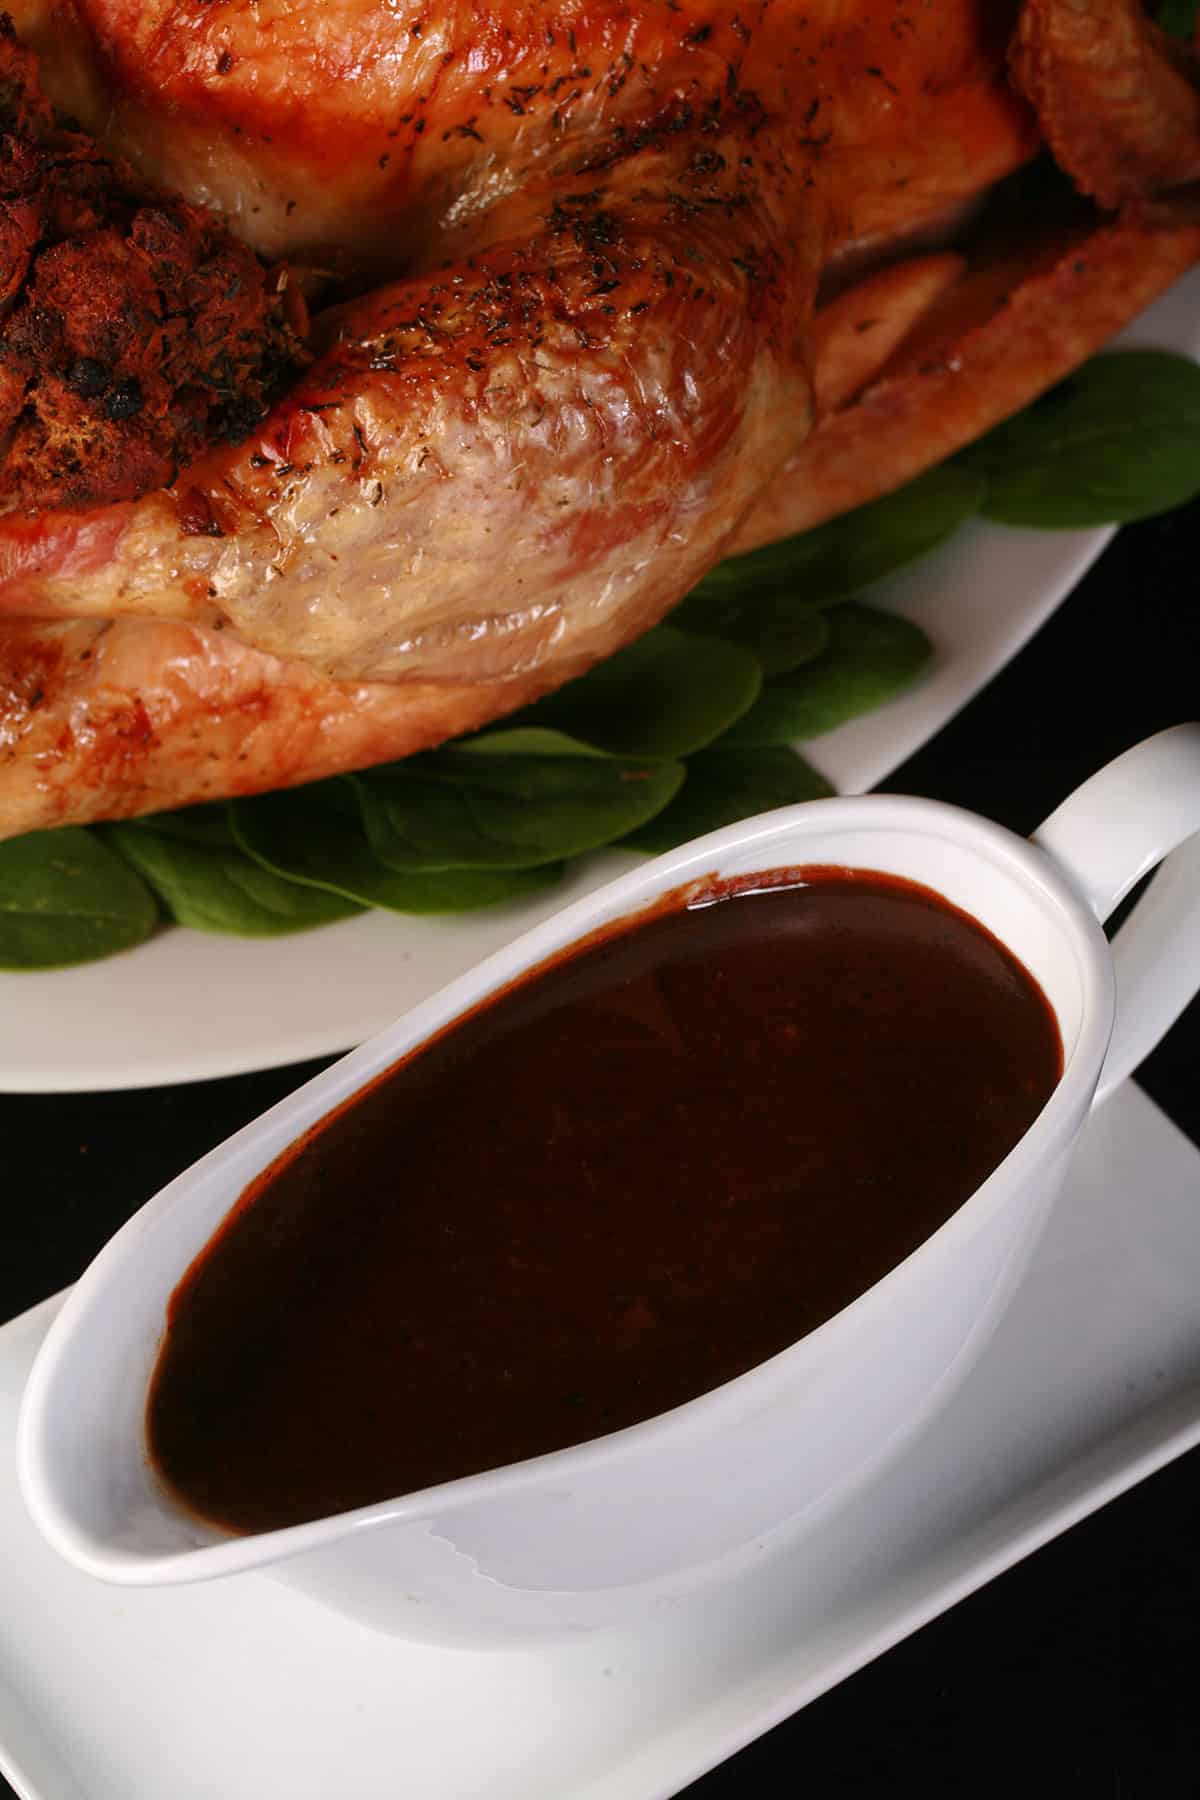 A gravy boat filled with very dark turkey gravy in front of a roasted stuffed turkey.